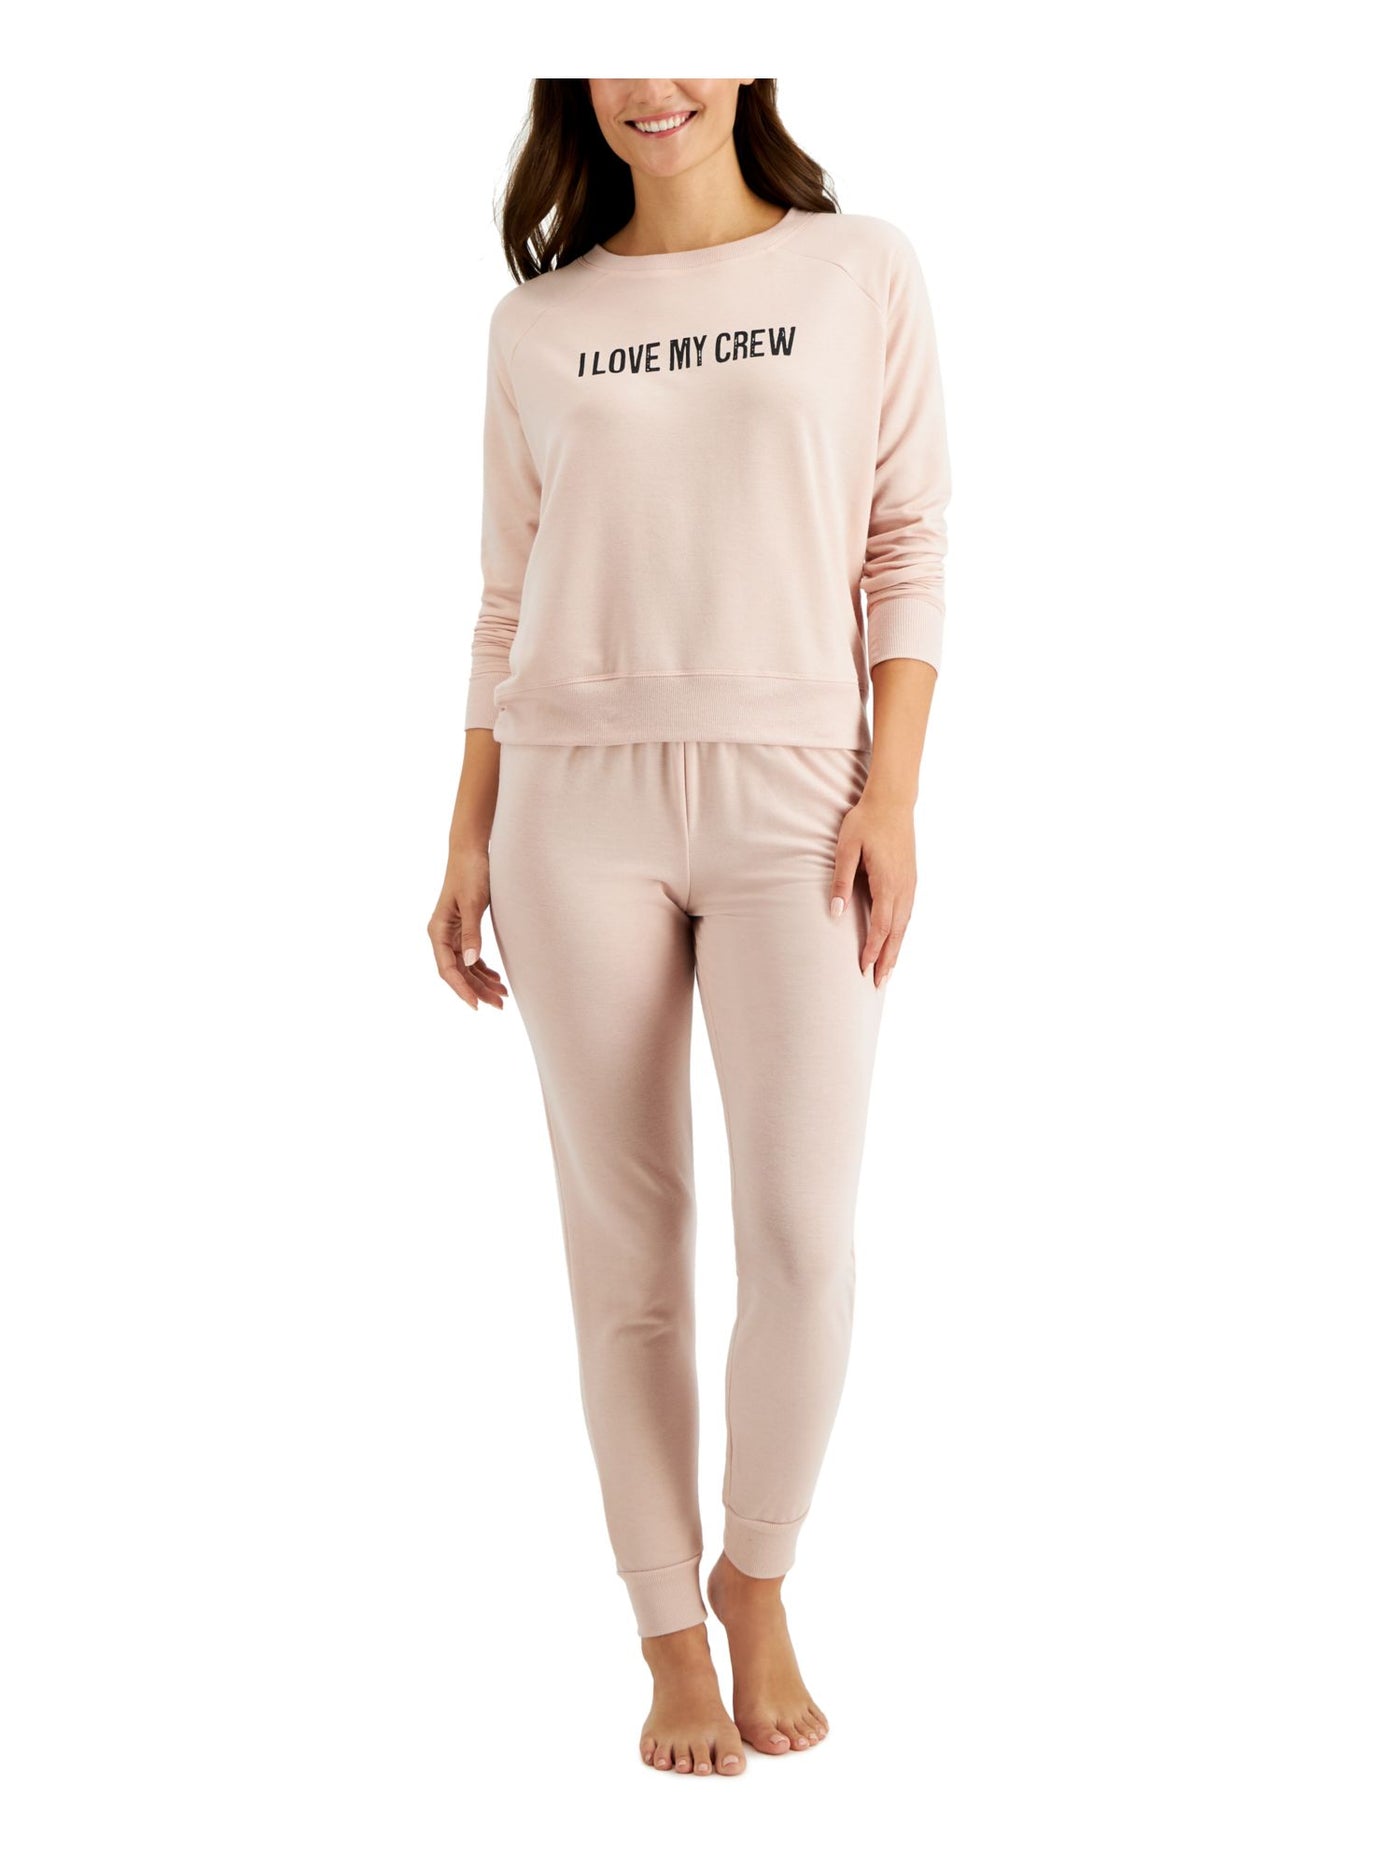 FAMILY PJs Womens Pink Printed Top Lounge Pants Stretch Pajamas XXL